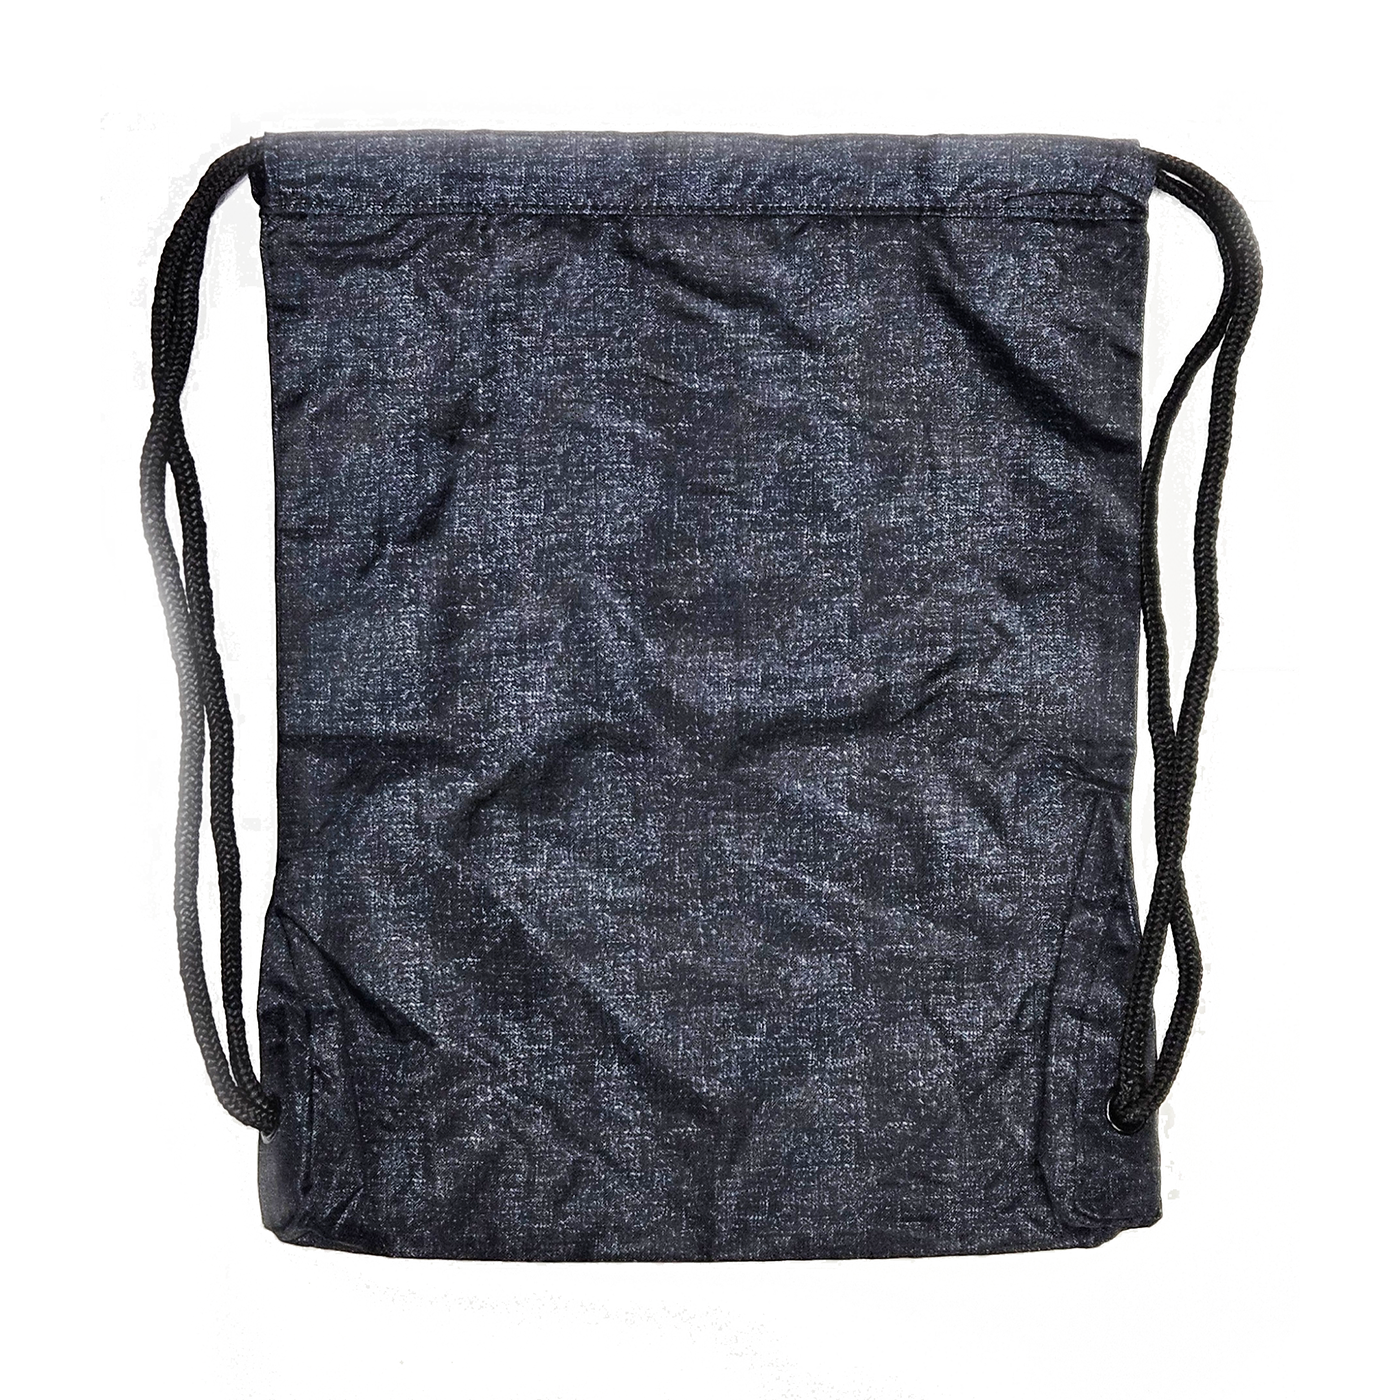 STOKYO Maharo Champion Drawstring Bag